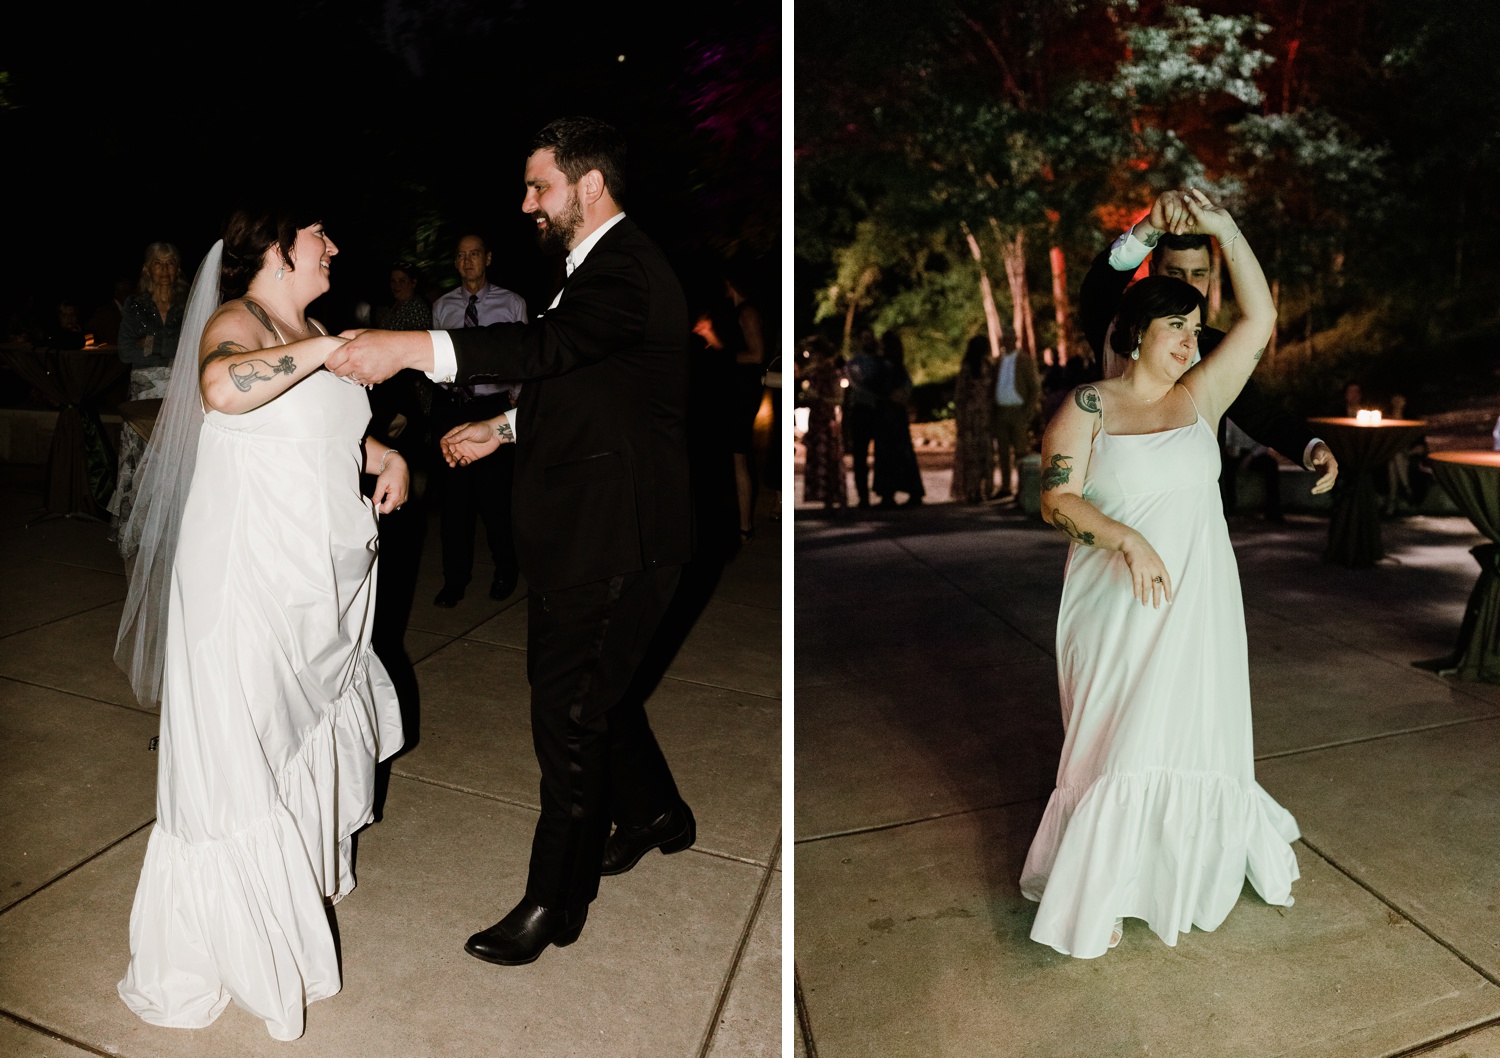 Bride and groom dancing outside at their wedding reception at UMLAUF Sculpture Garden